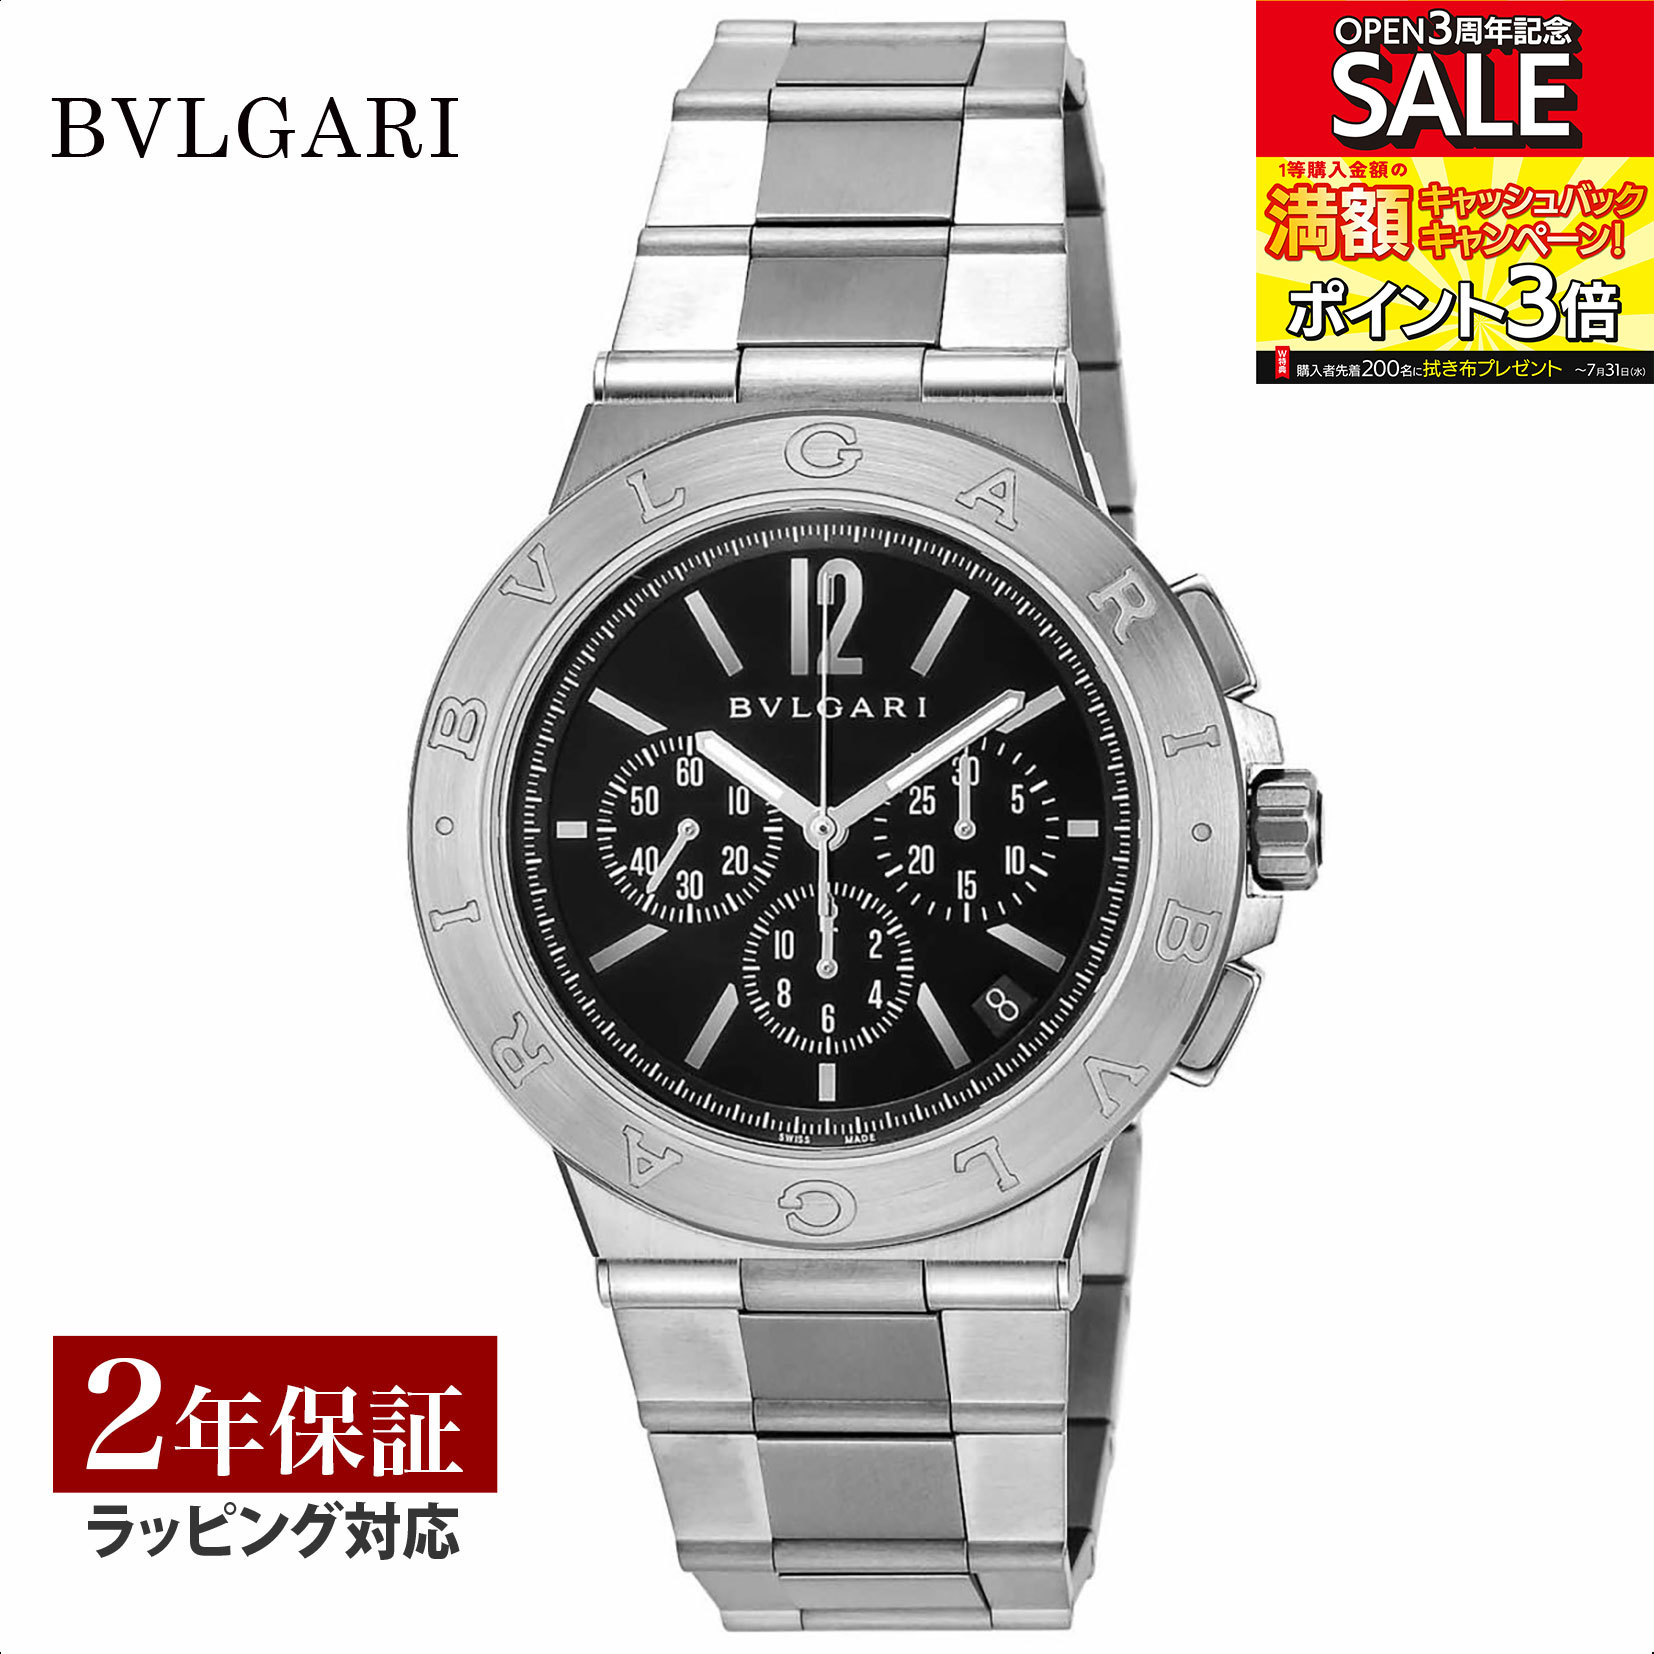 BVLGARI ブルガリ DIAGONO ディアゴノ 自動巻 メンズ ブラック DG41BSSDCH 時計 腕時計 高級腕時計 ブランド